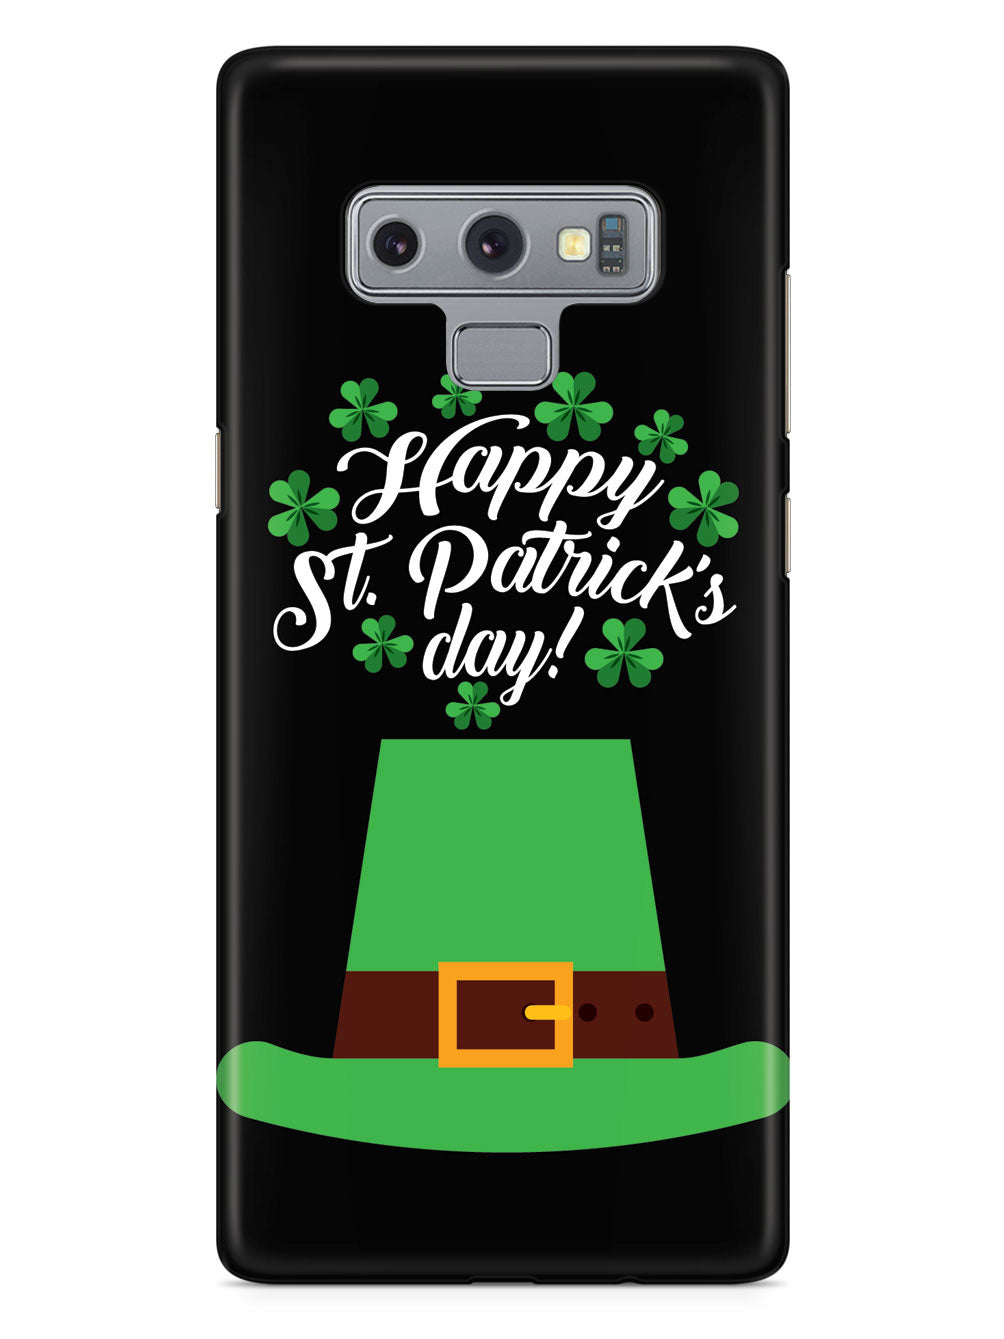 Happy St. Patrick's Day Greeting - Black Case